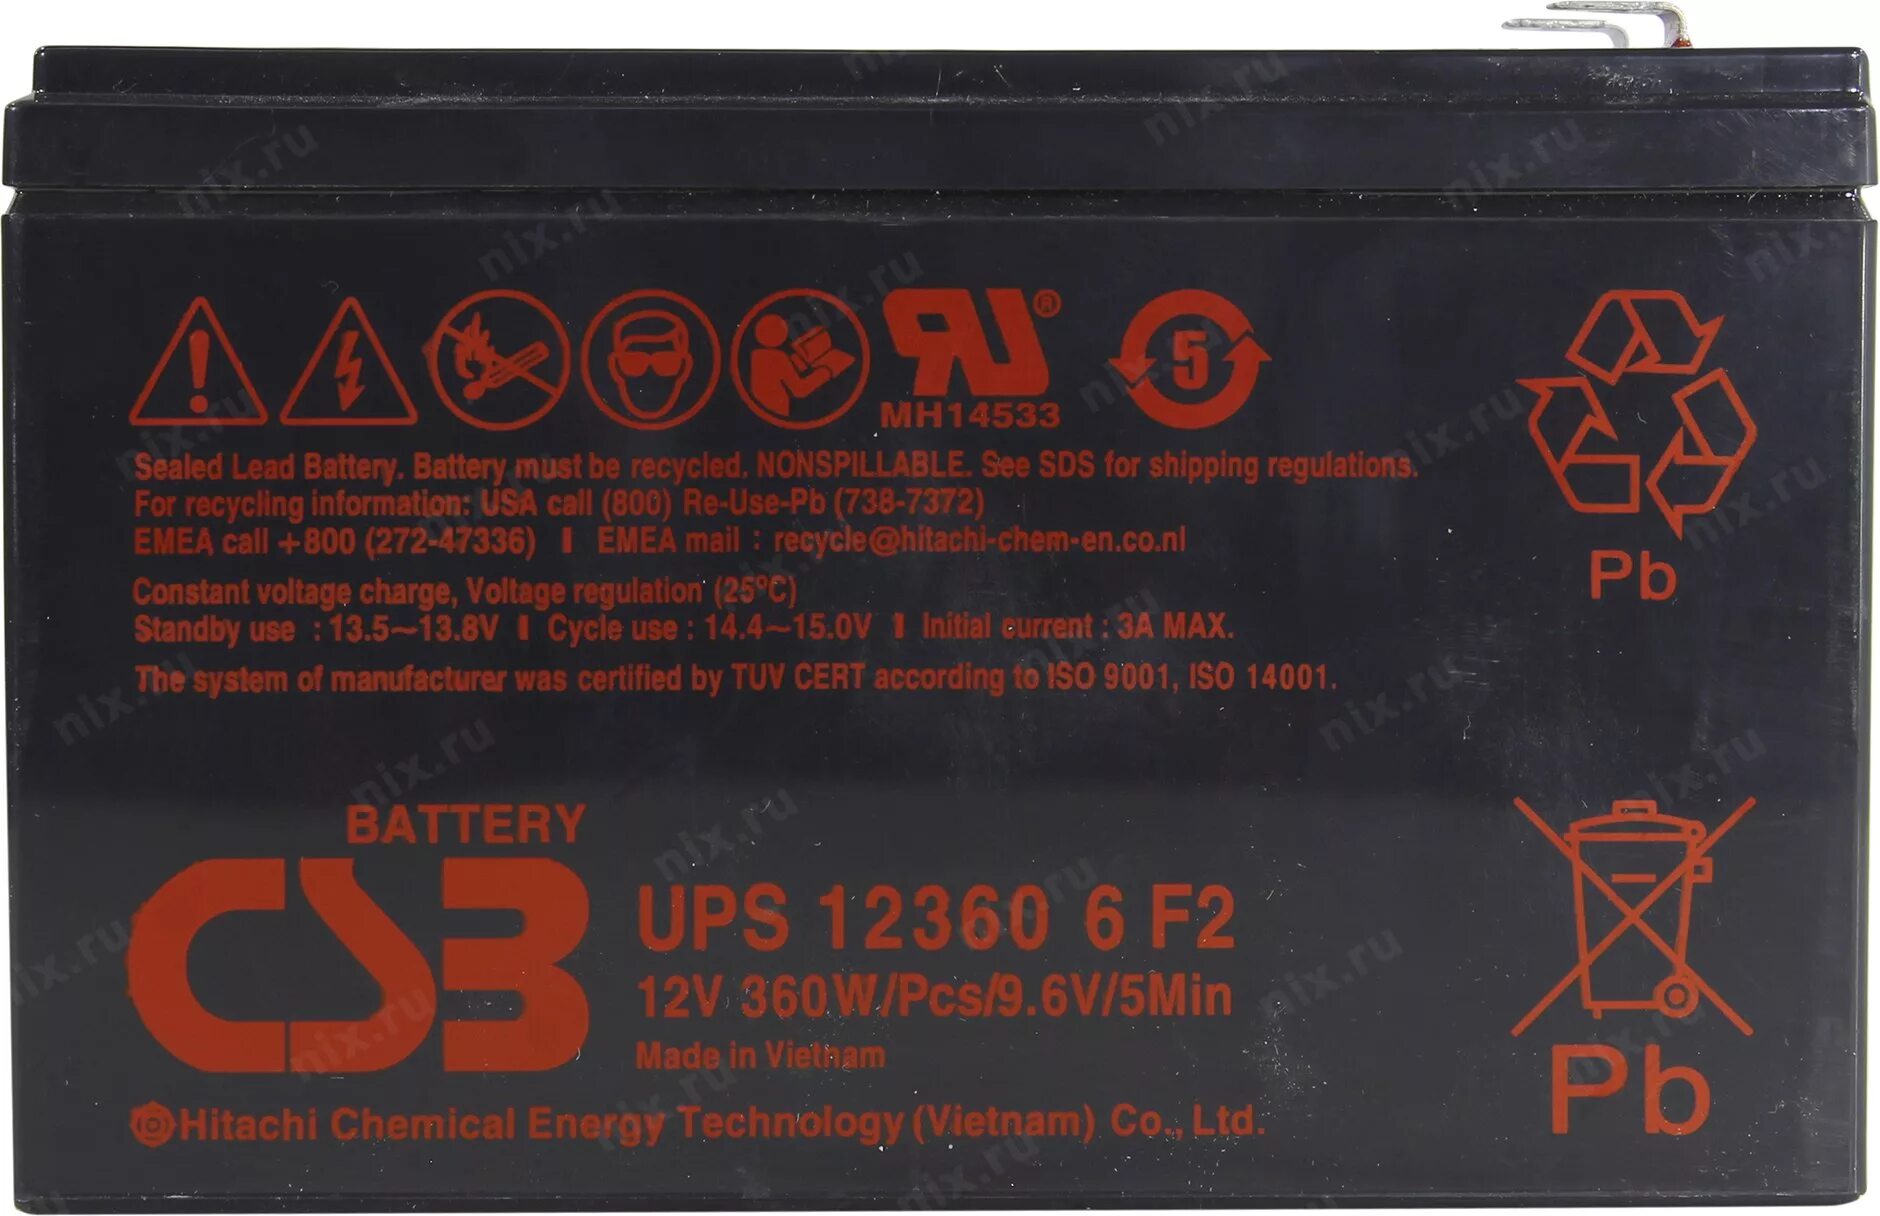 Батарея f2 12v. Аккумулятор CSB ups 123606. АКБ 12-5 CSB ups (ups122406 f2). Ups 12360 7 f2 12v 360w/PCS/9.6V/5min. Аккумулятор ups12360 7 f2.